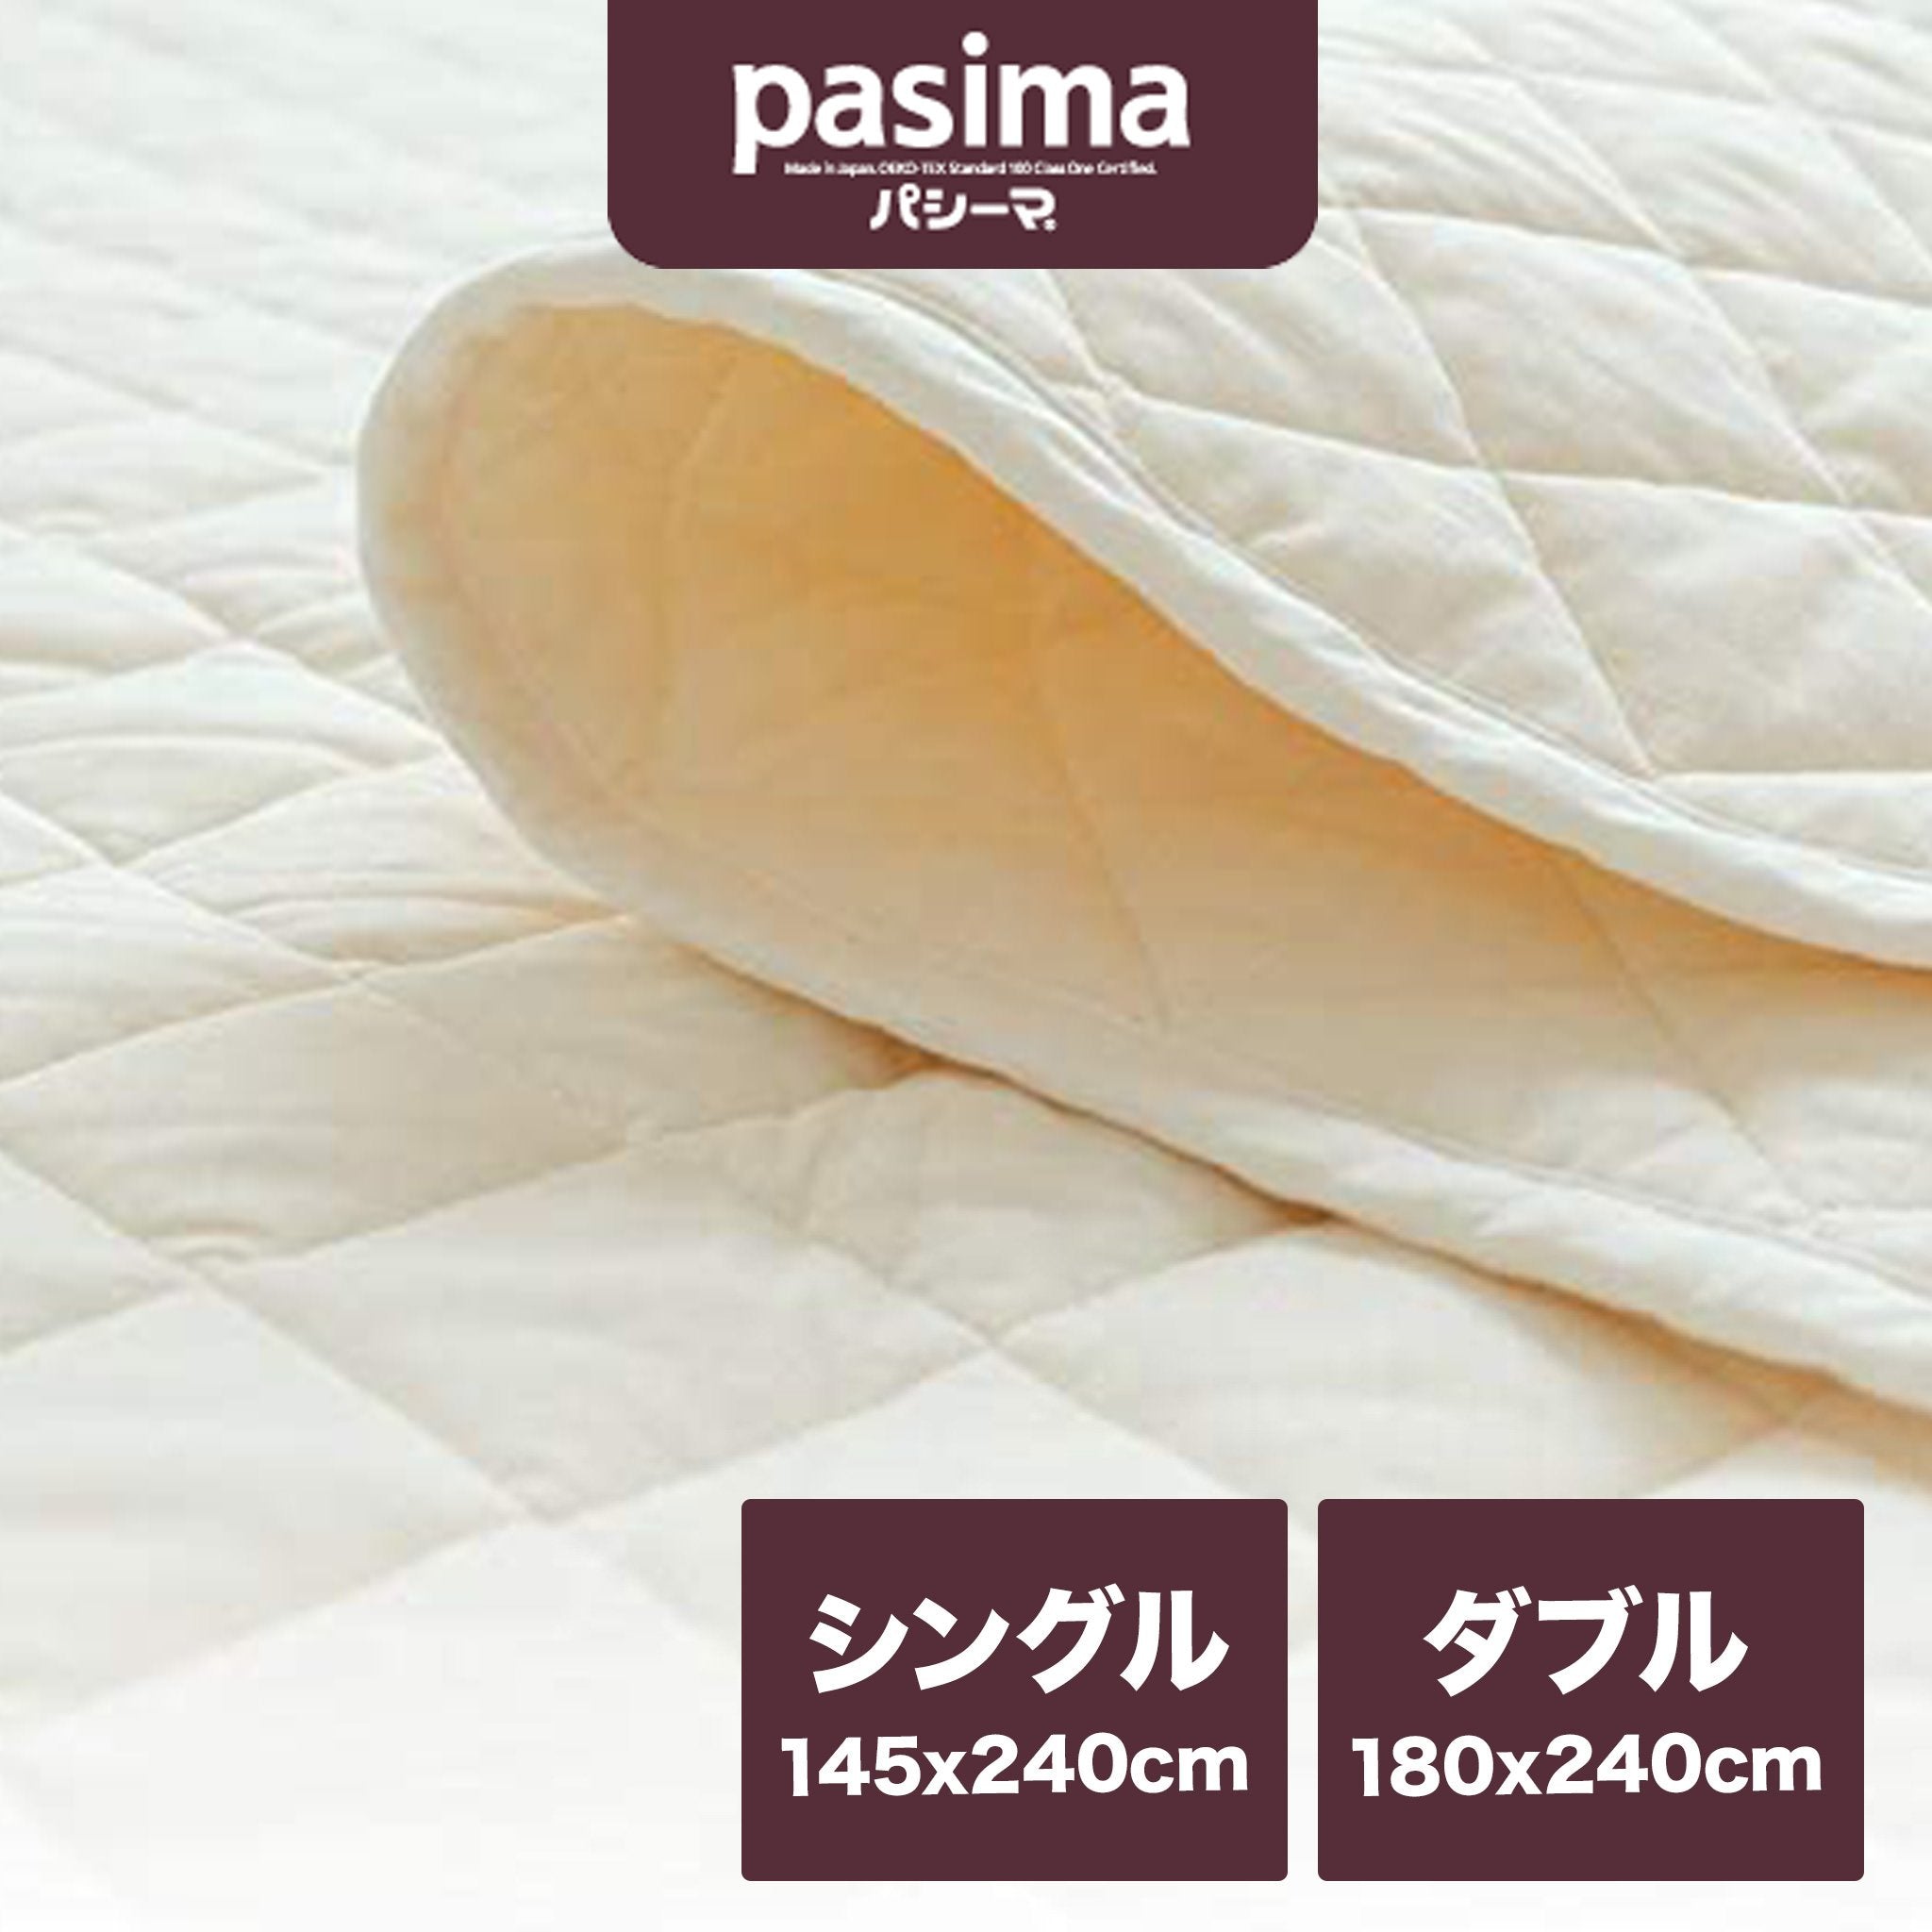 pasima 脱脂綿とガーゼでつくる究極の寝具 キルトケット(3層構造